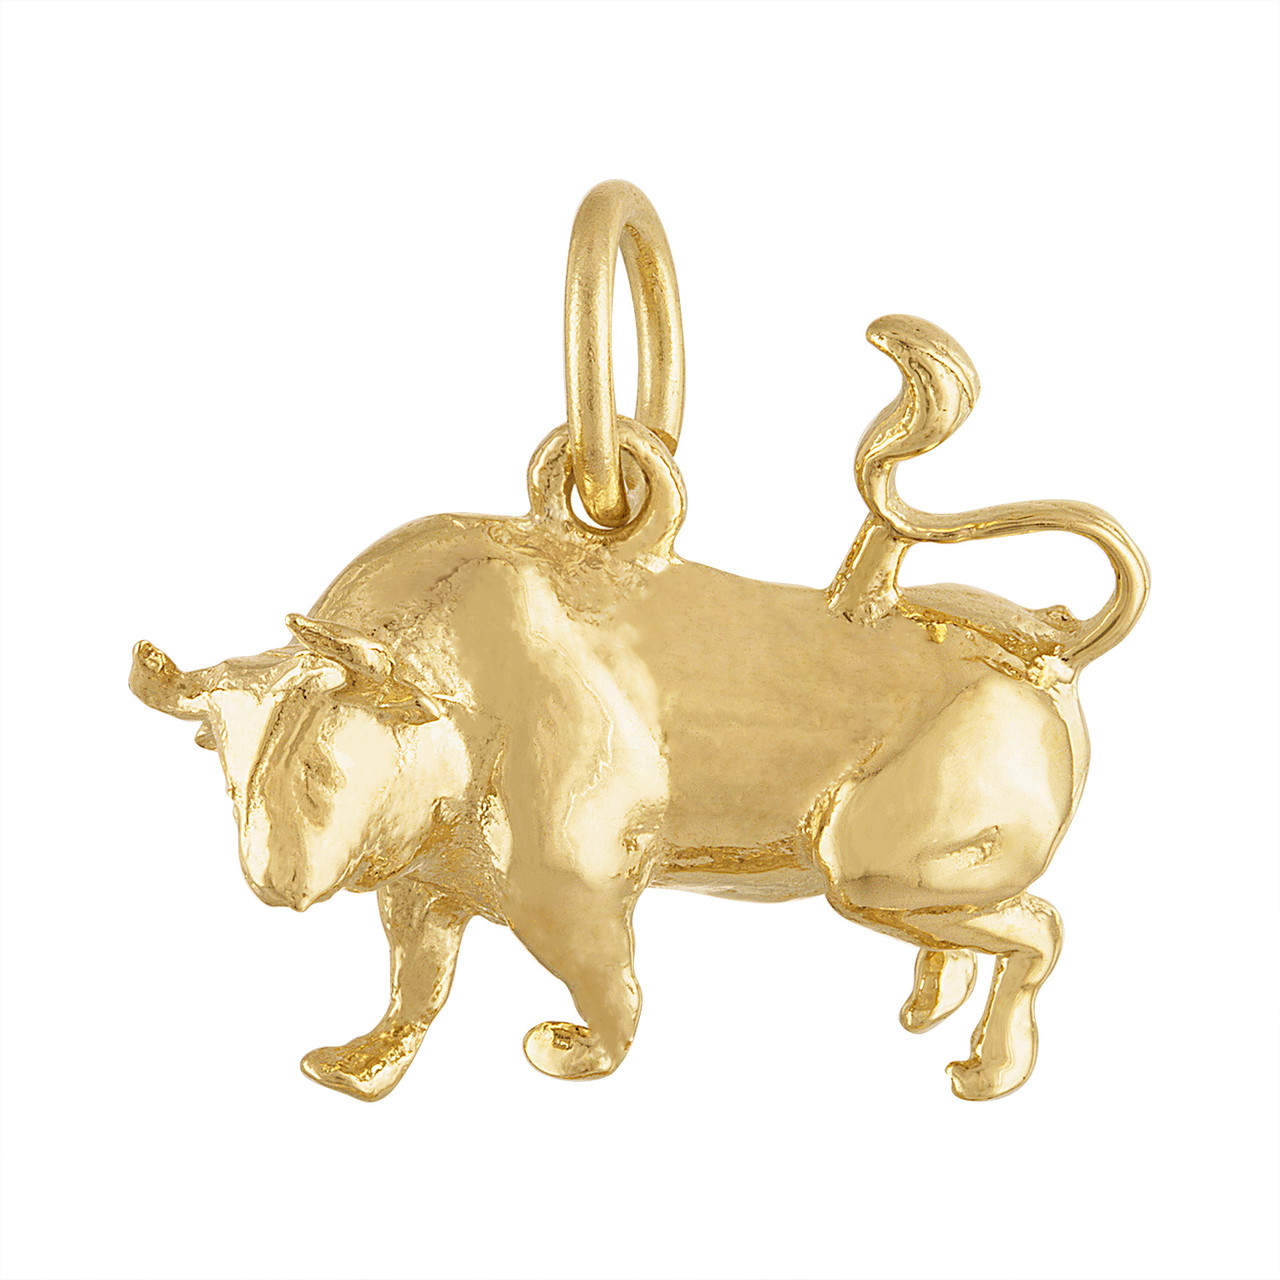 Ox Brass Cat Charms 9pc